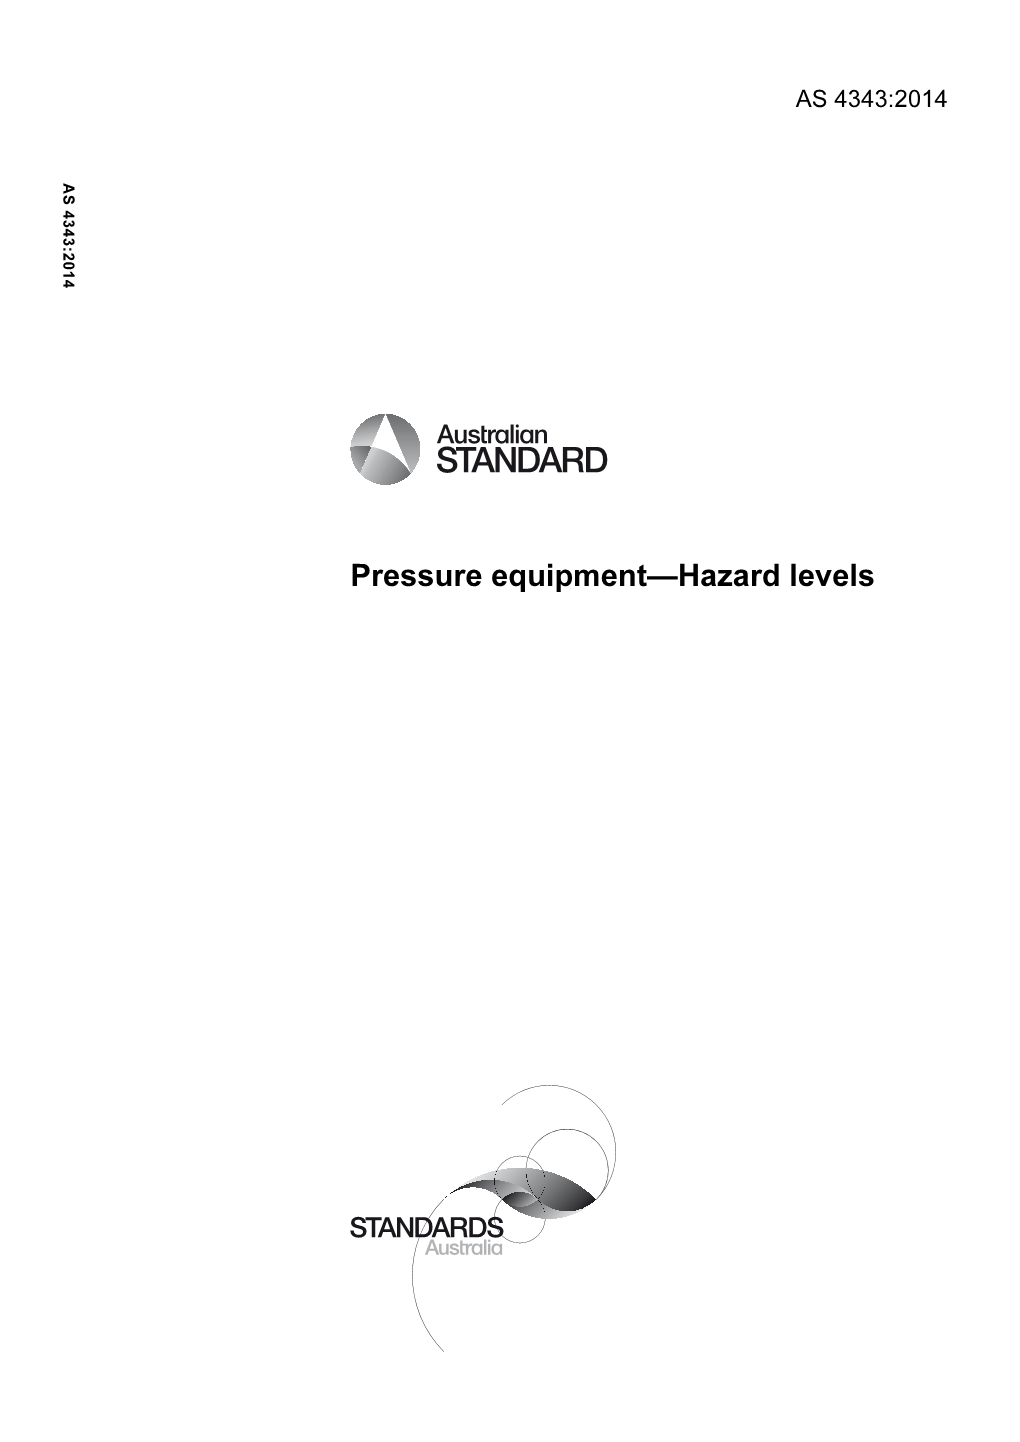 AS 4343:2014 Pressure Equipment—Hazard Levels